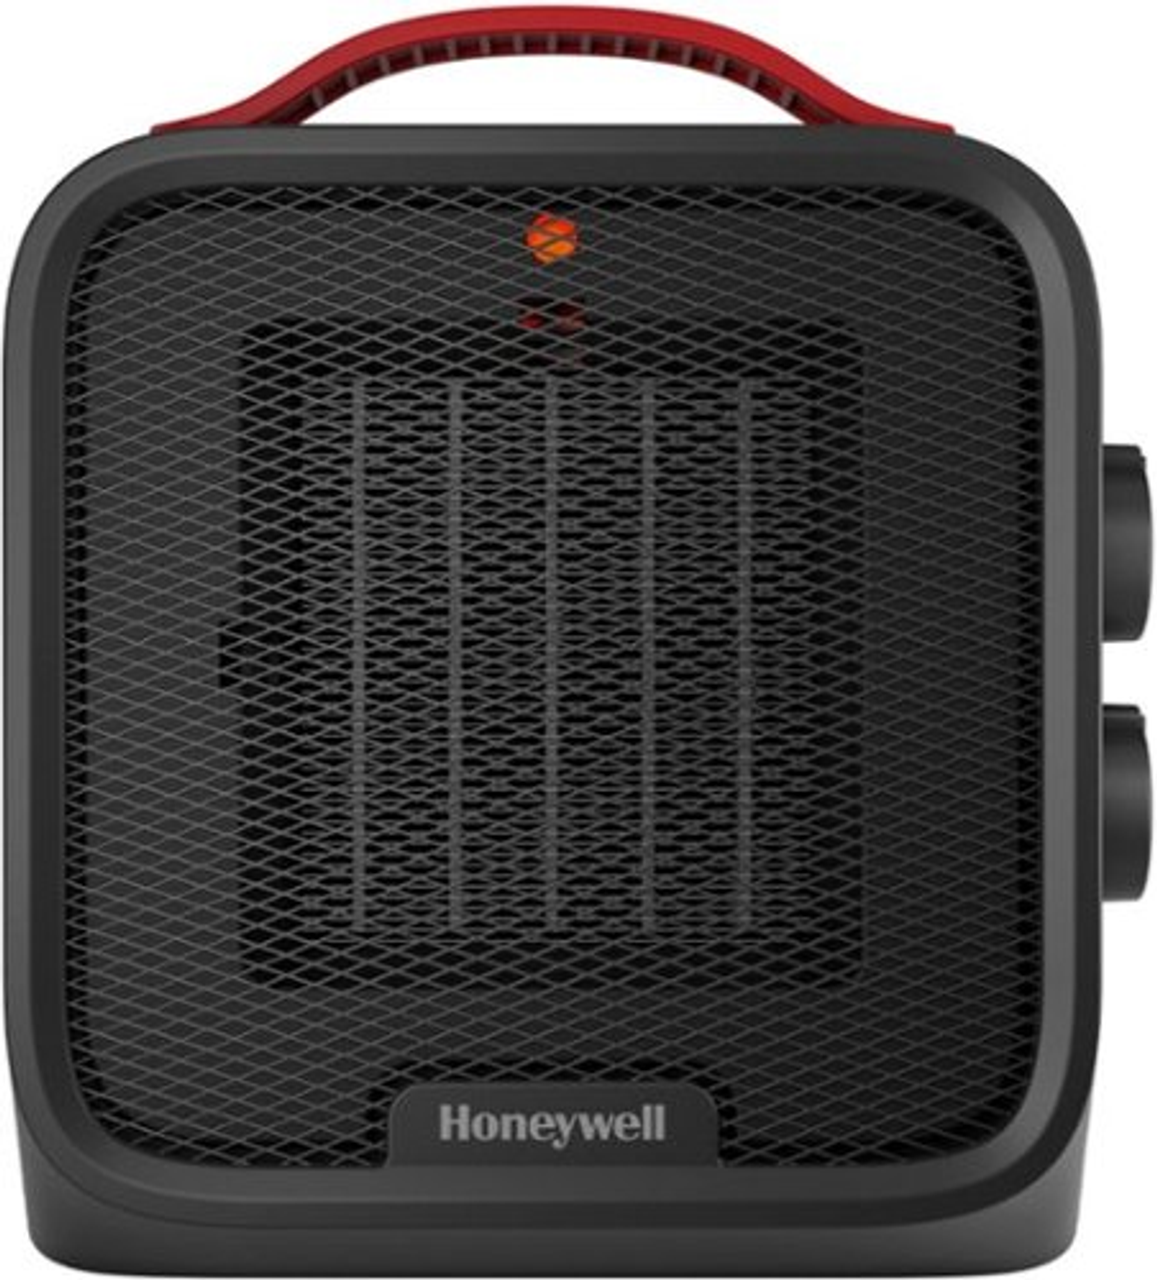 Honeywell UberHeat 5 Ceramic Heater Black - Black